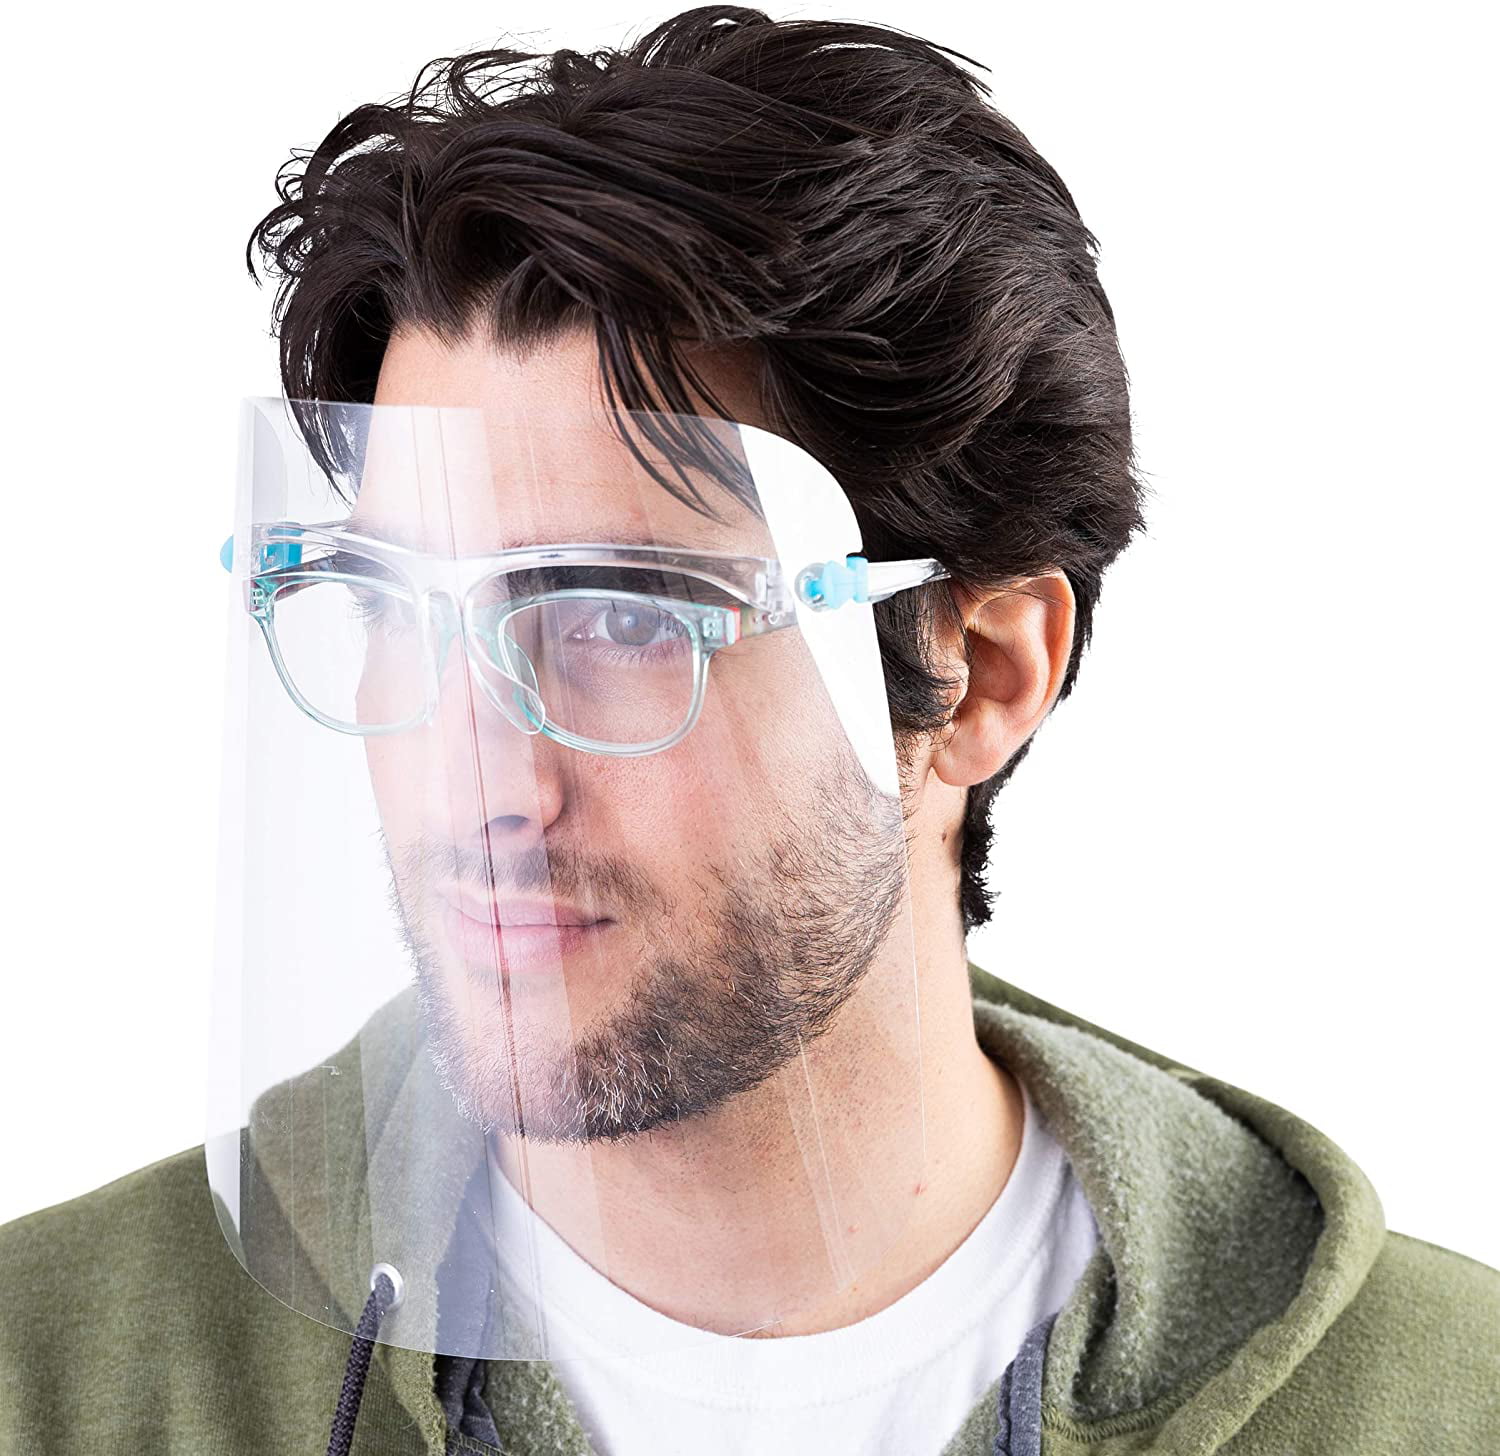 5pcs AVJONE Safety Face Shield Reusable Goggle Shield Wearing Glasses Face Visor Transparent Anti-Fog Layer Protect Eyes from Splash